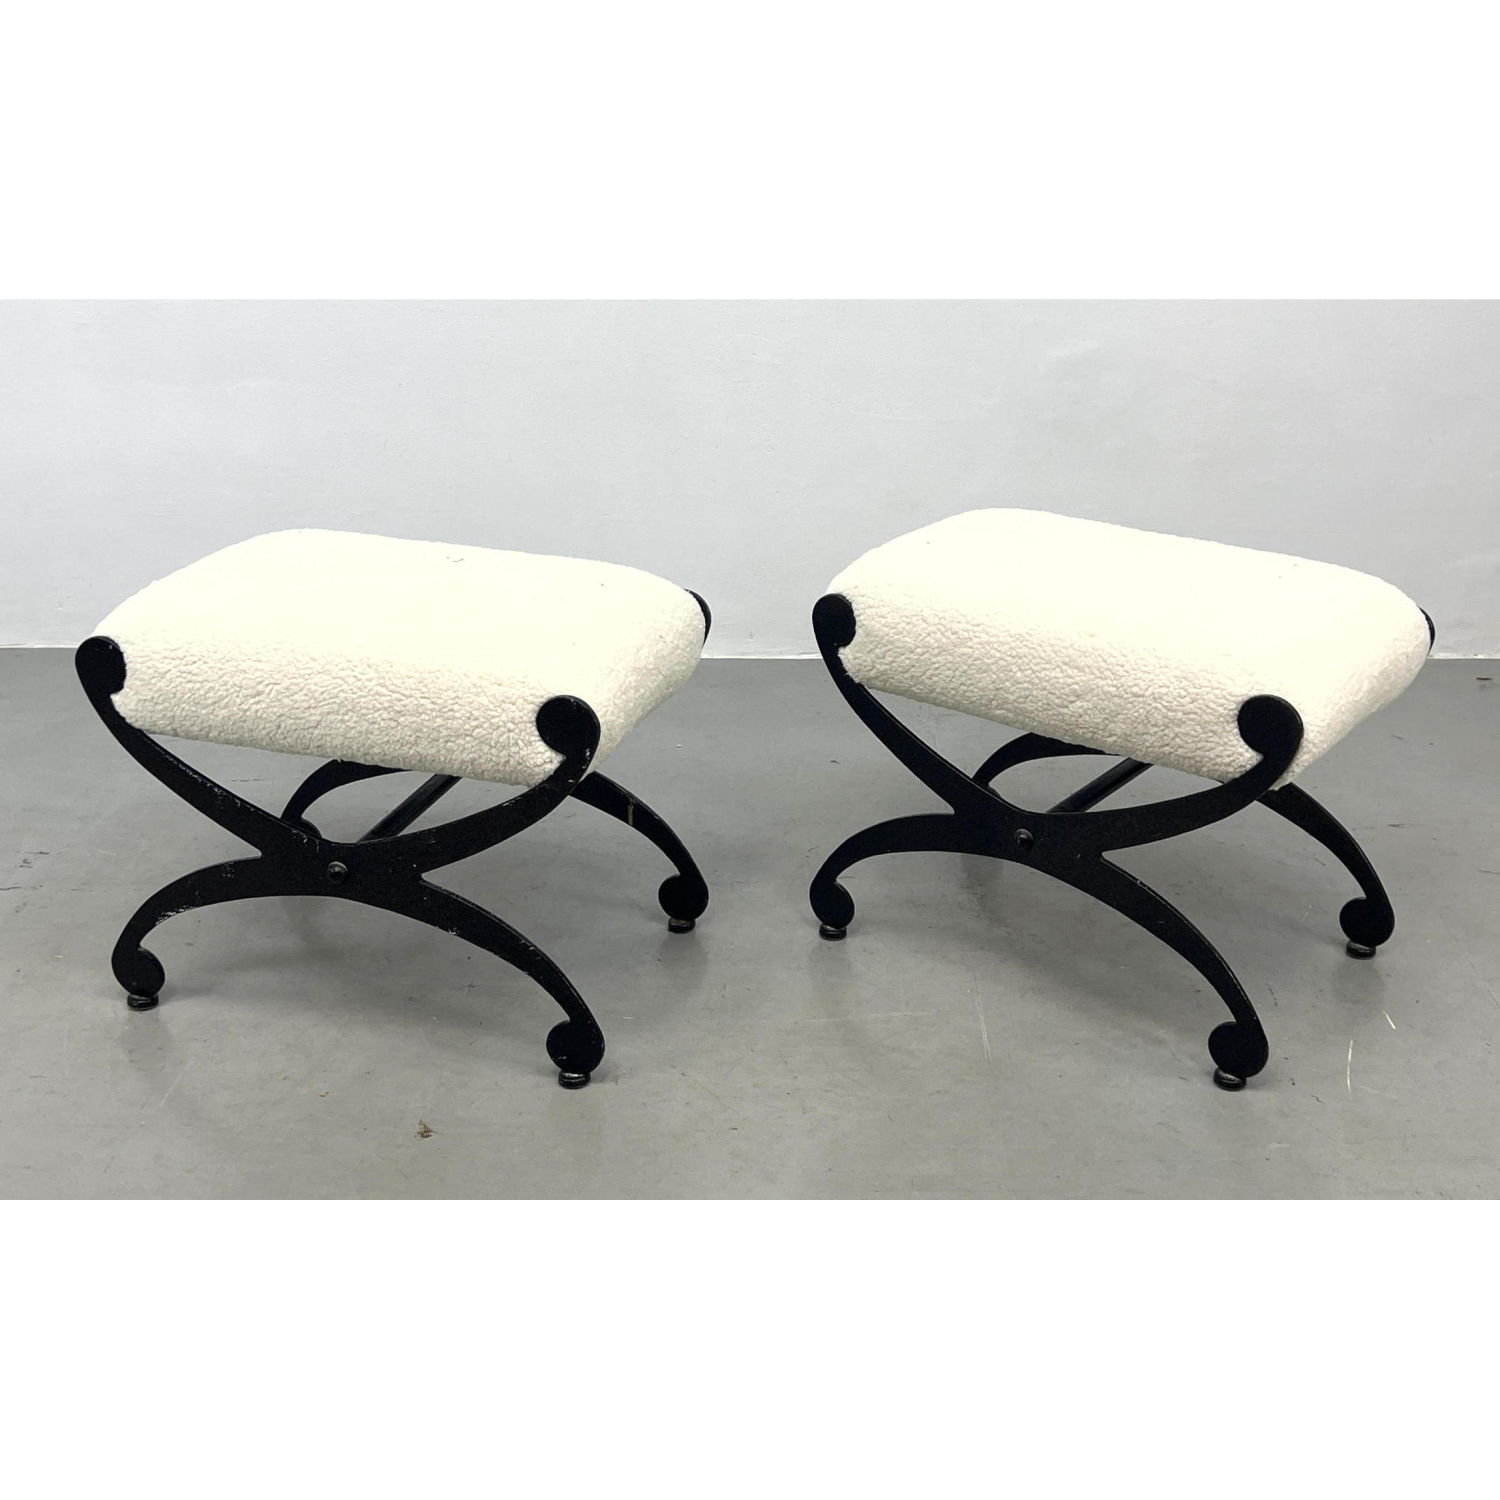 Pr Decorator Iron X base stools  2b8e58